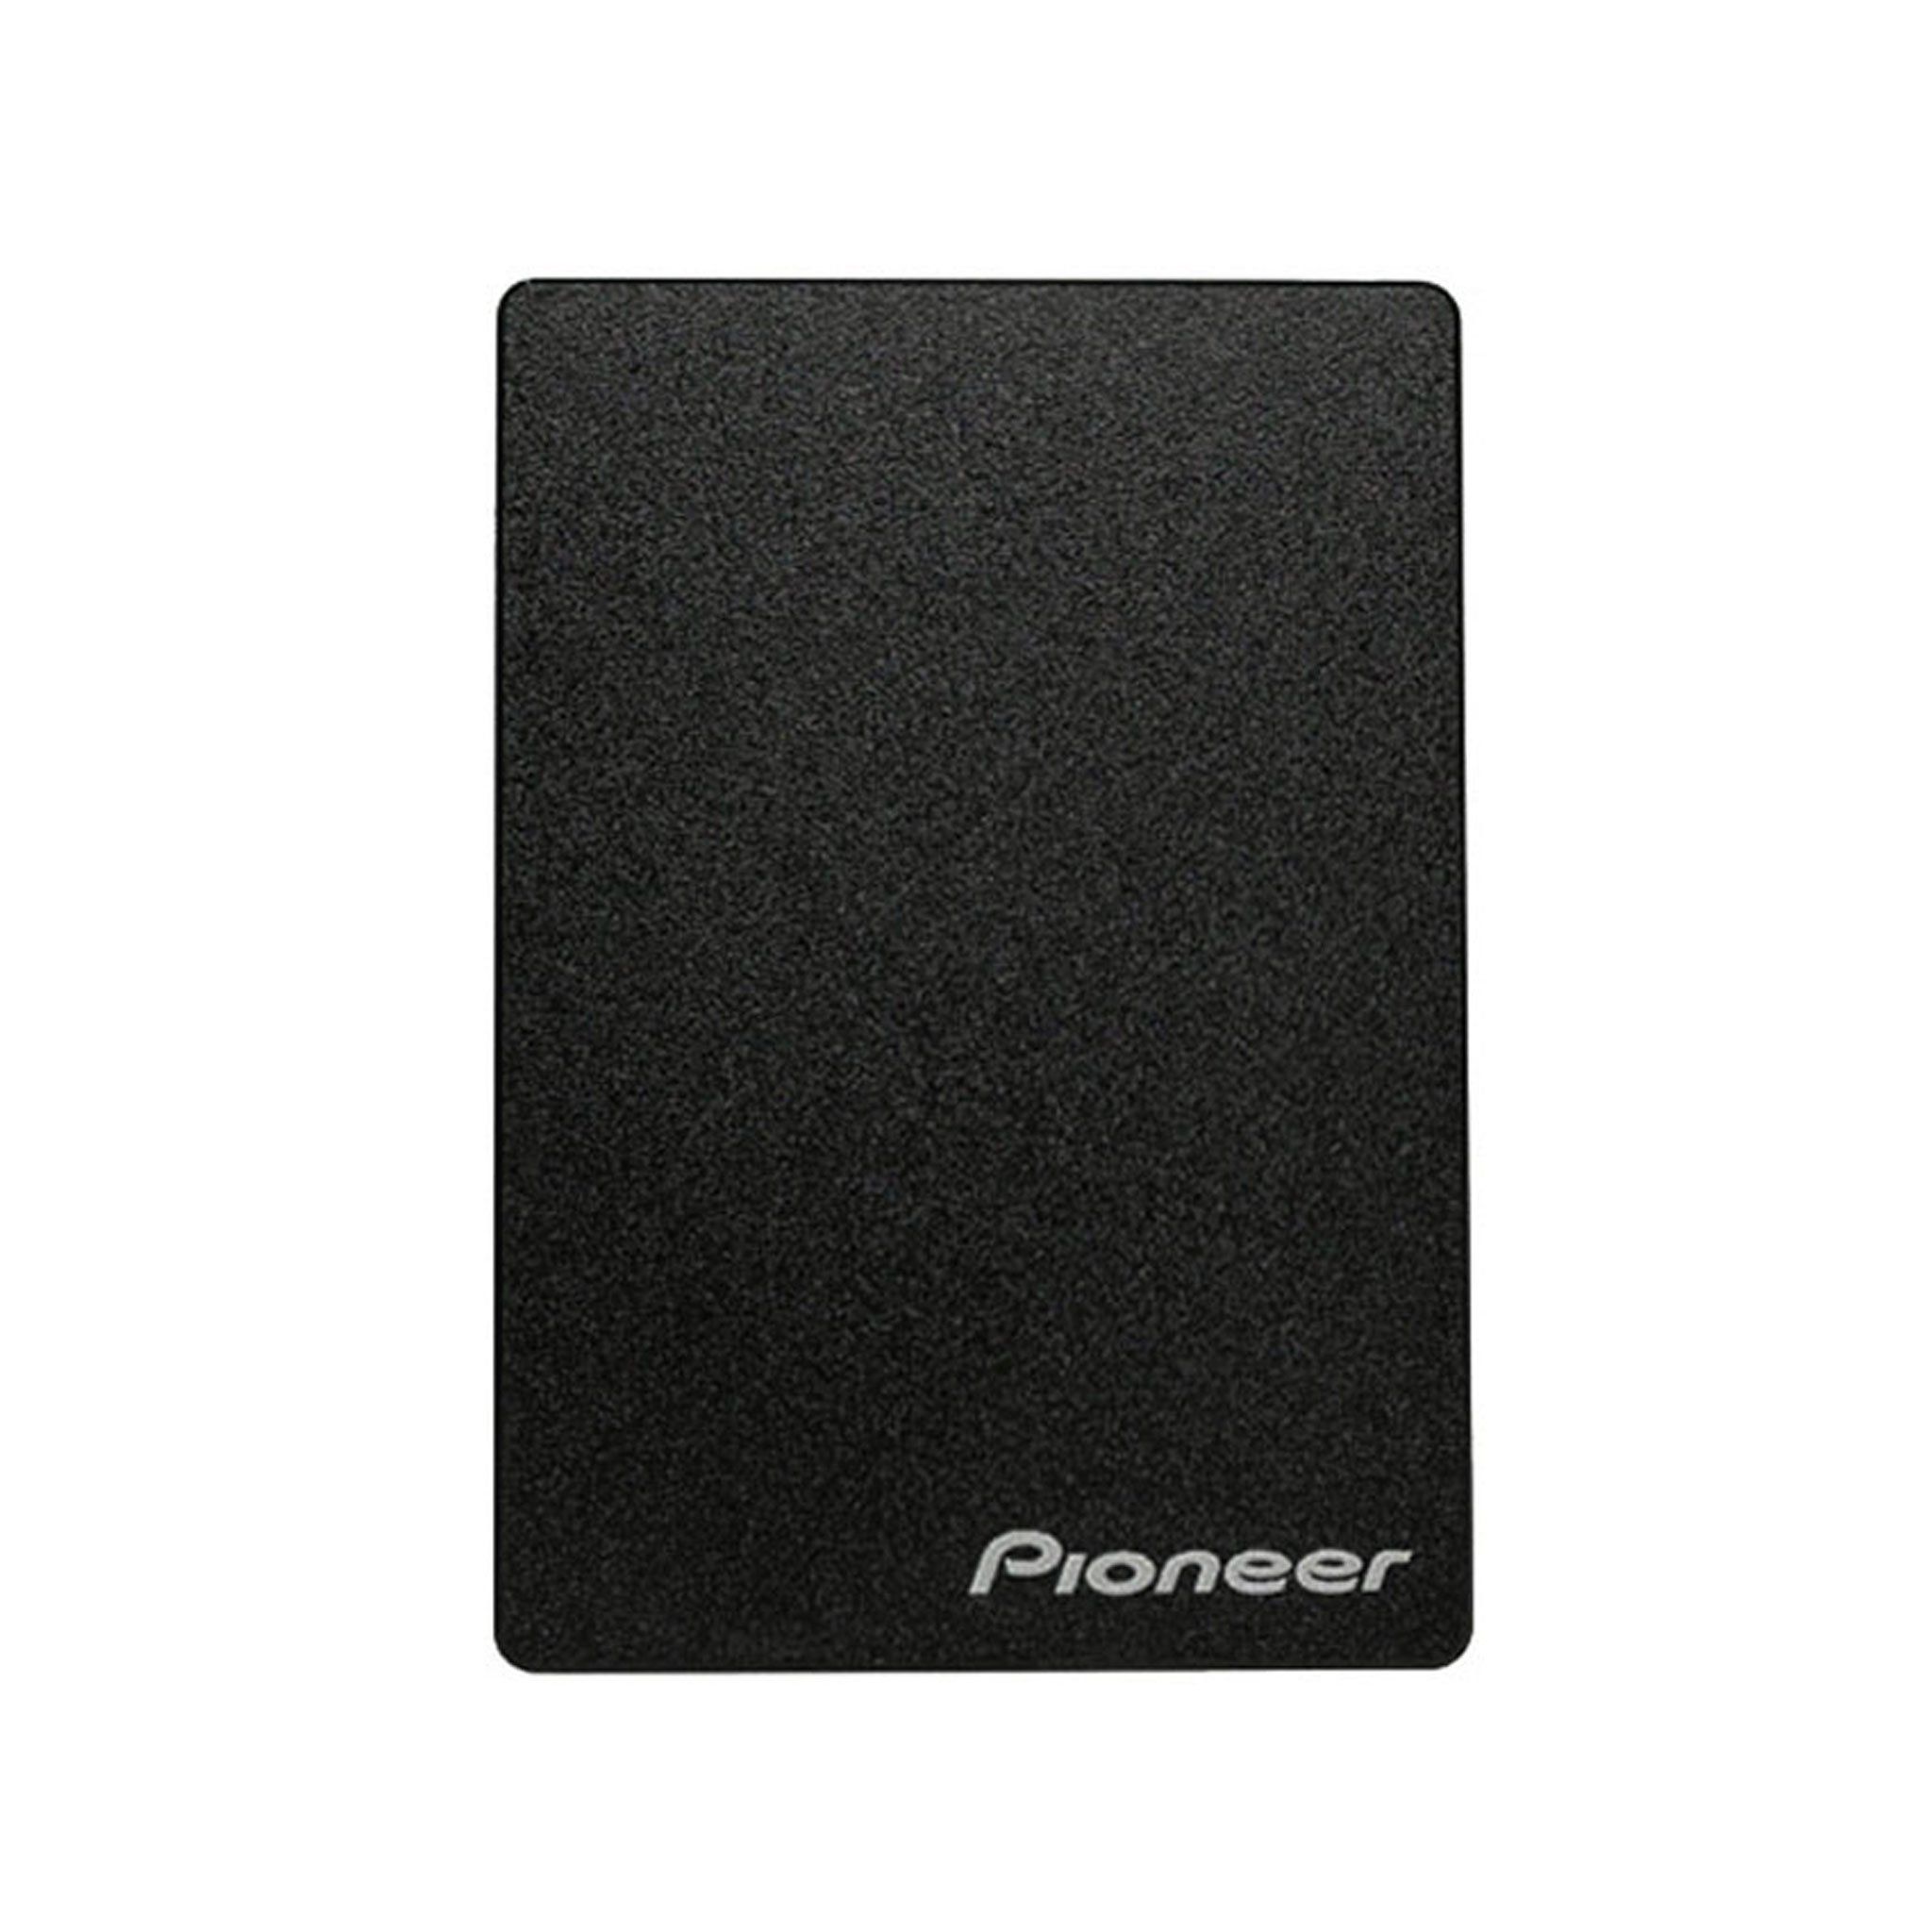 Ổ cứng SSD Pioneer 1TB Sata III APS-SL2-1T